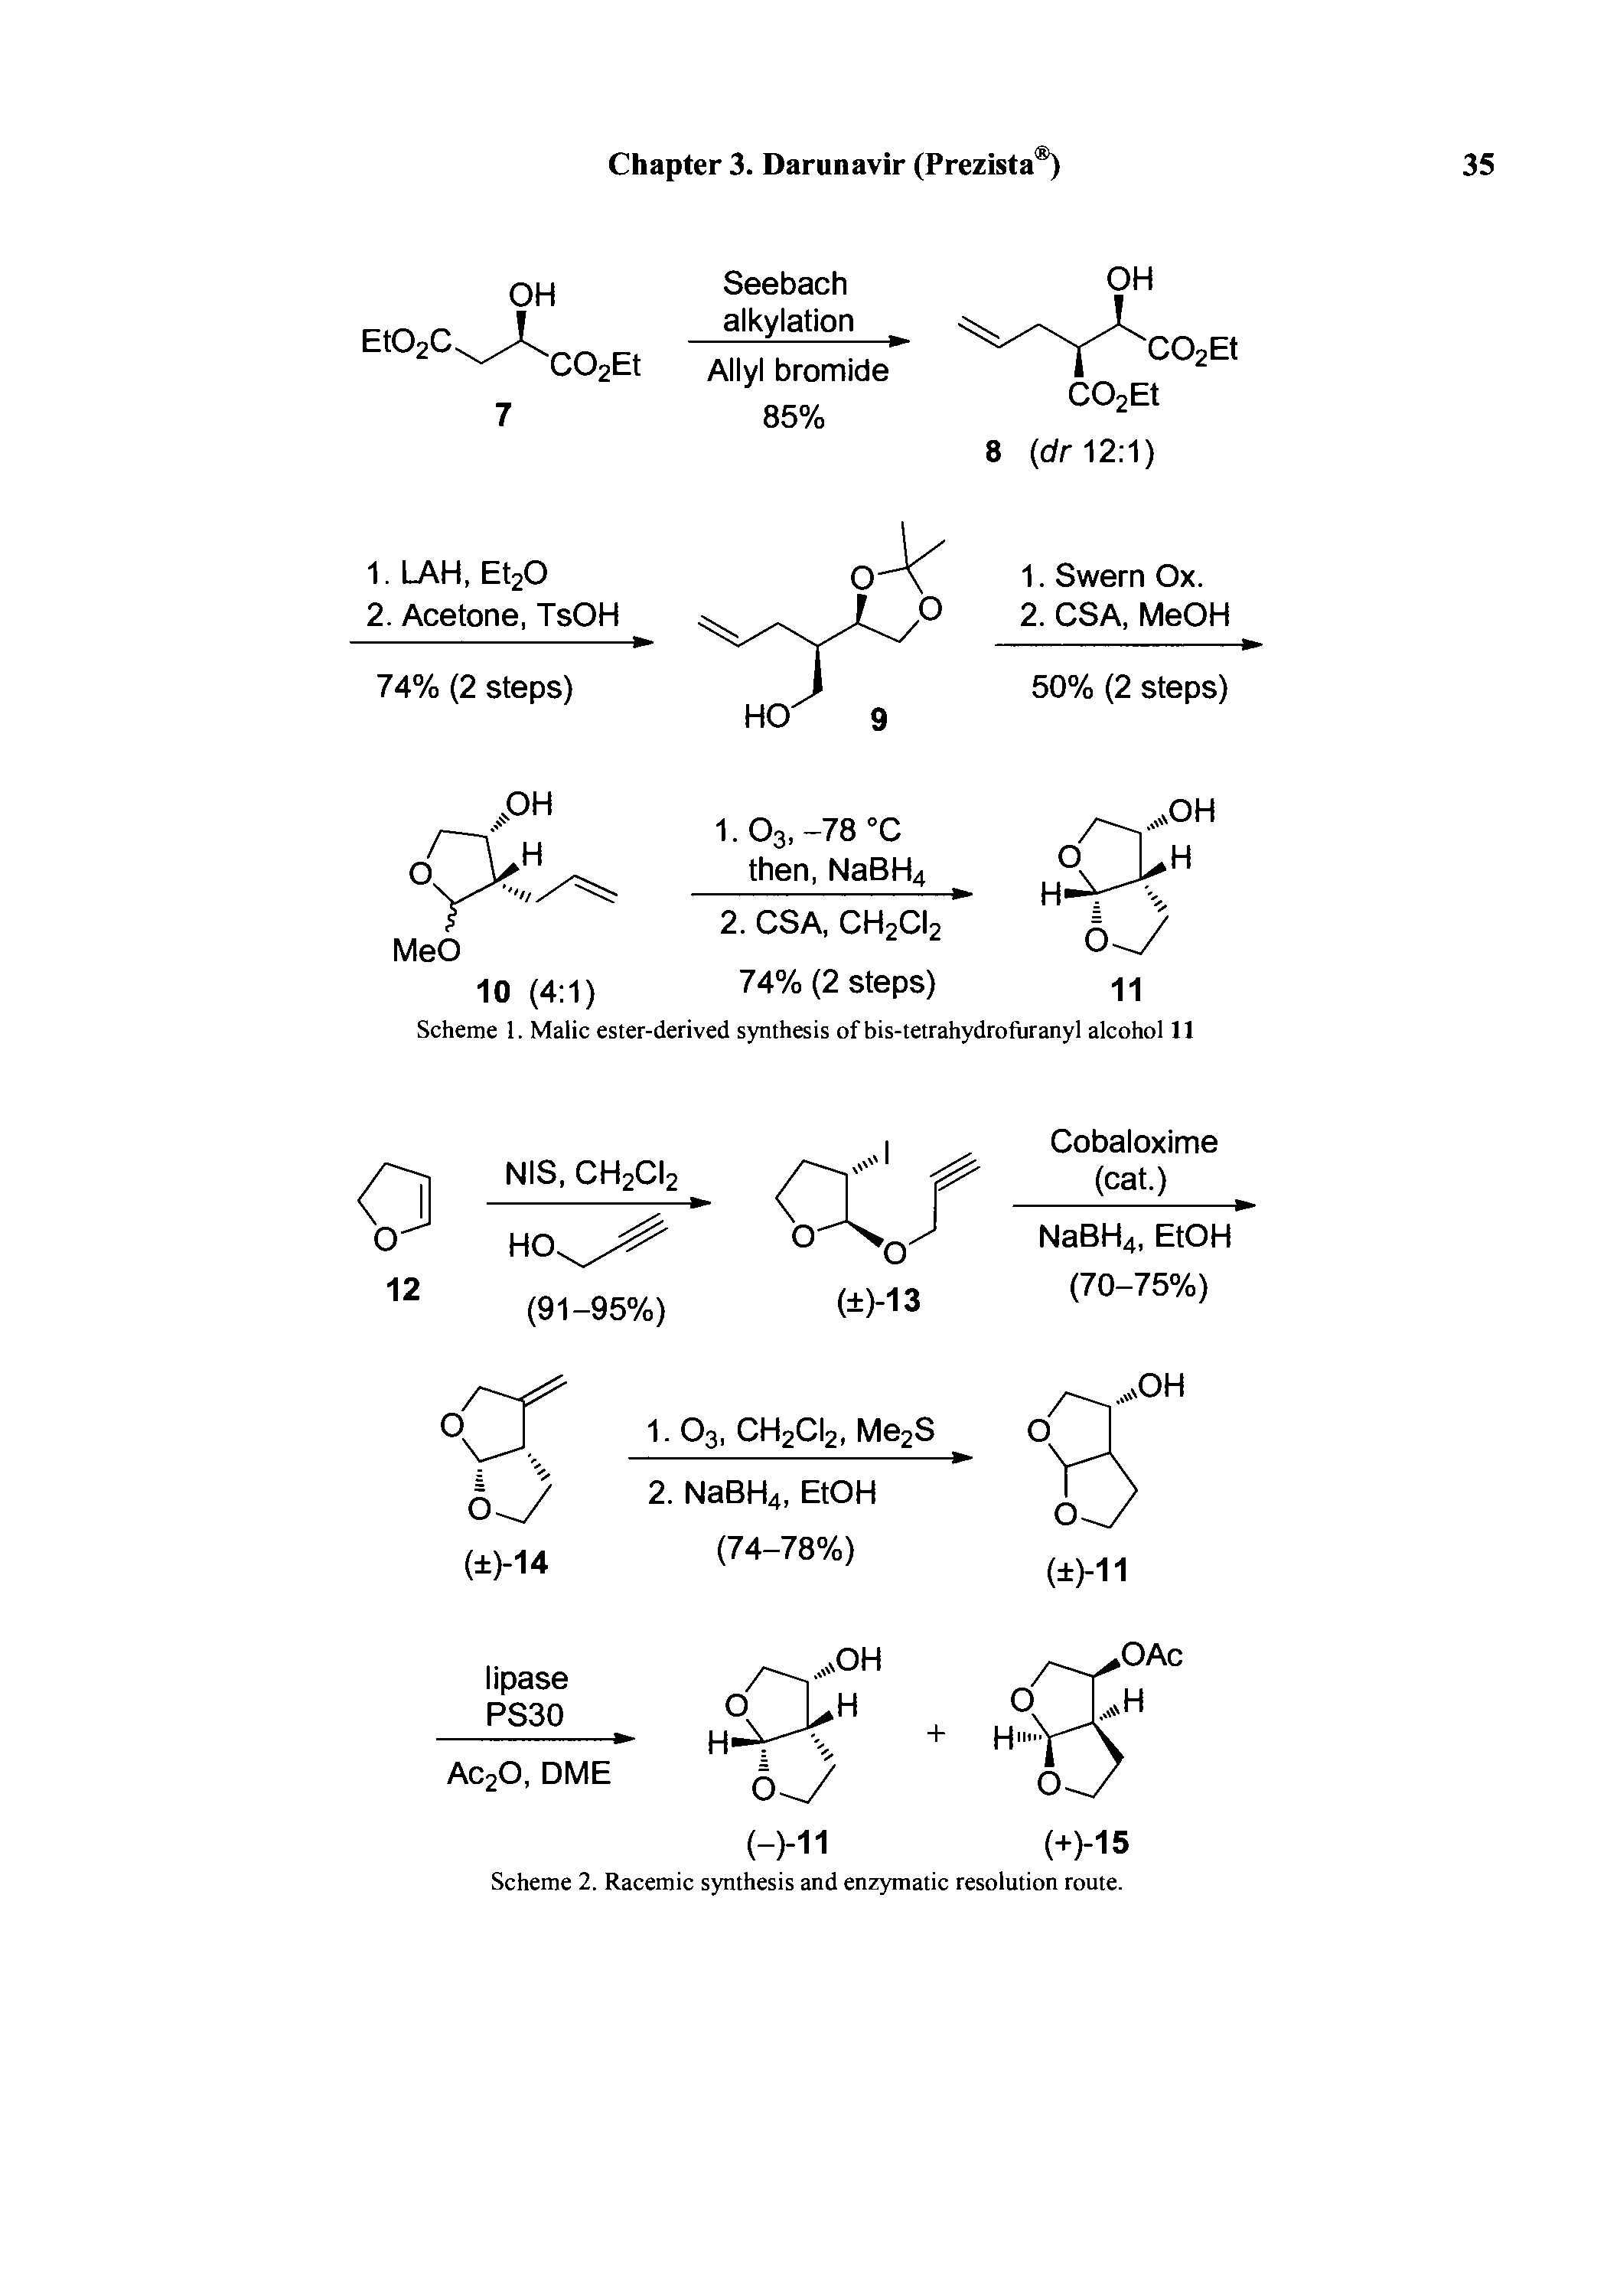 Scheme 1. Malic ester-derived synthesis of bis-tetrahydrofuranyl alcohol 11...